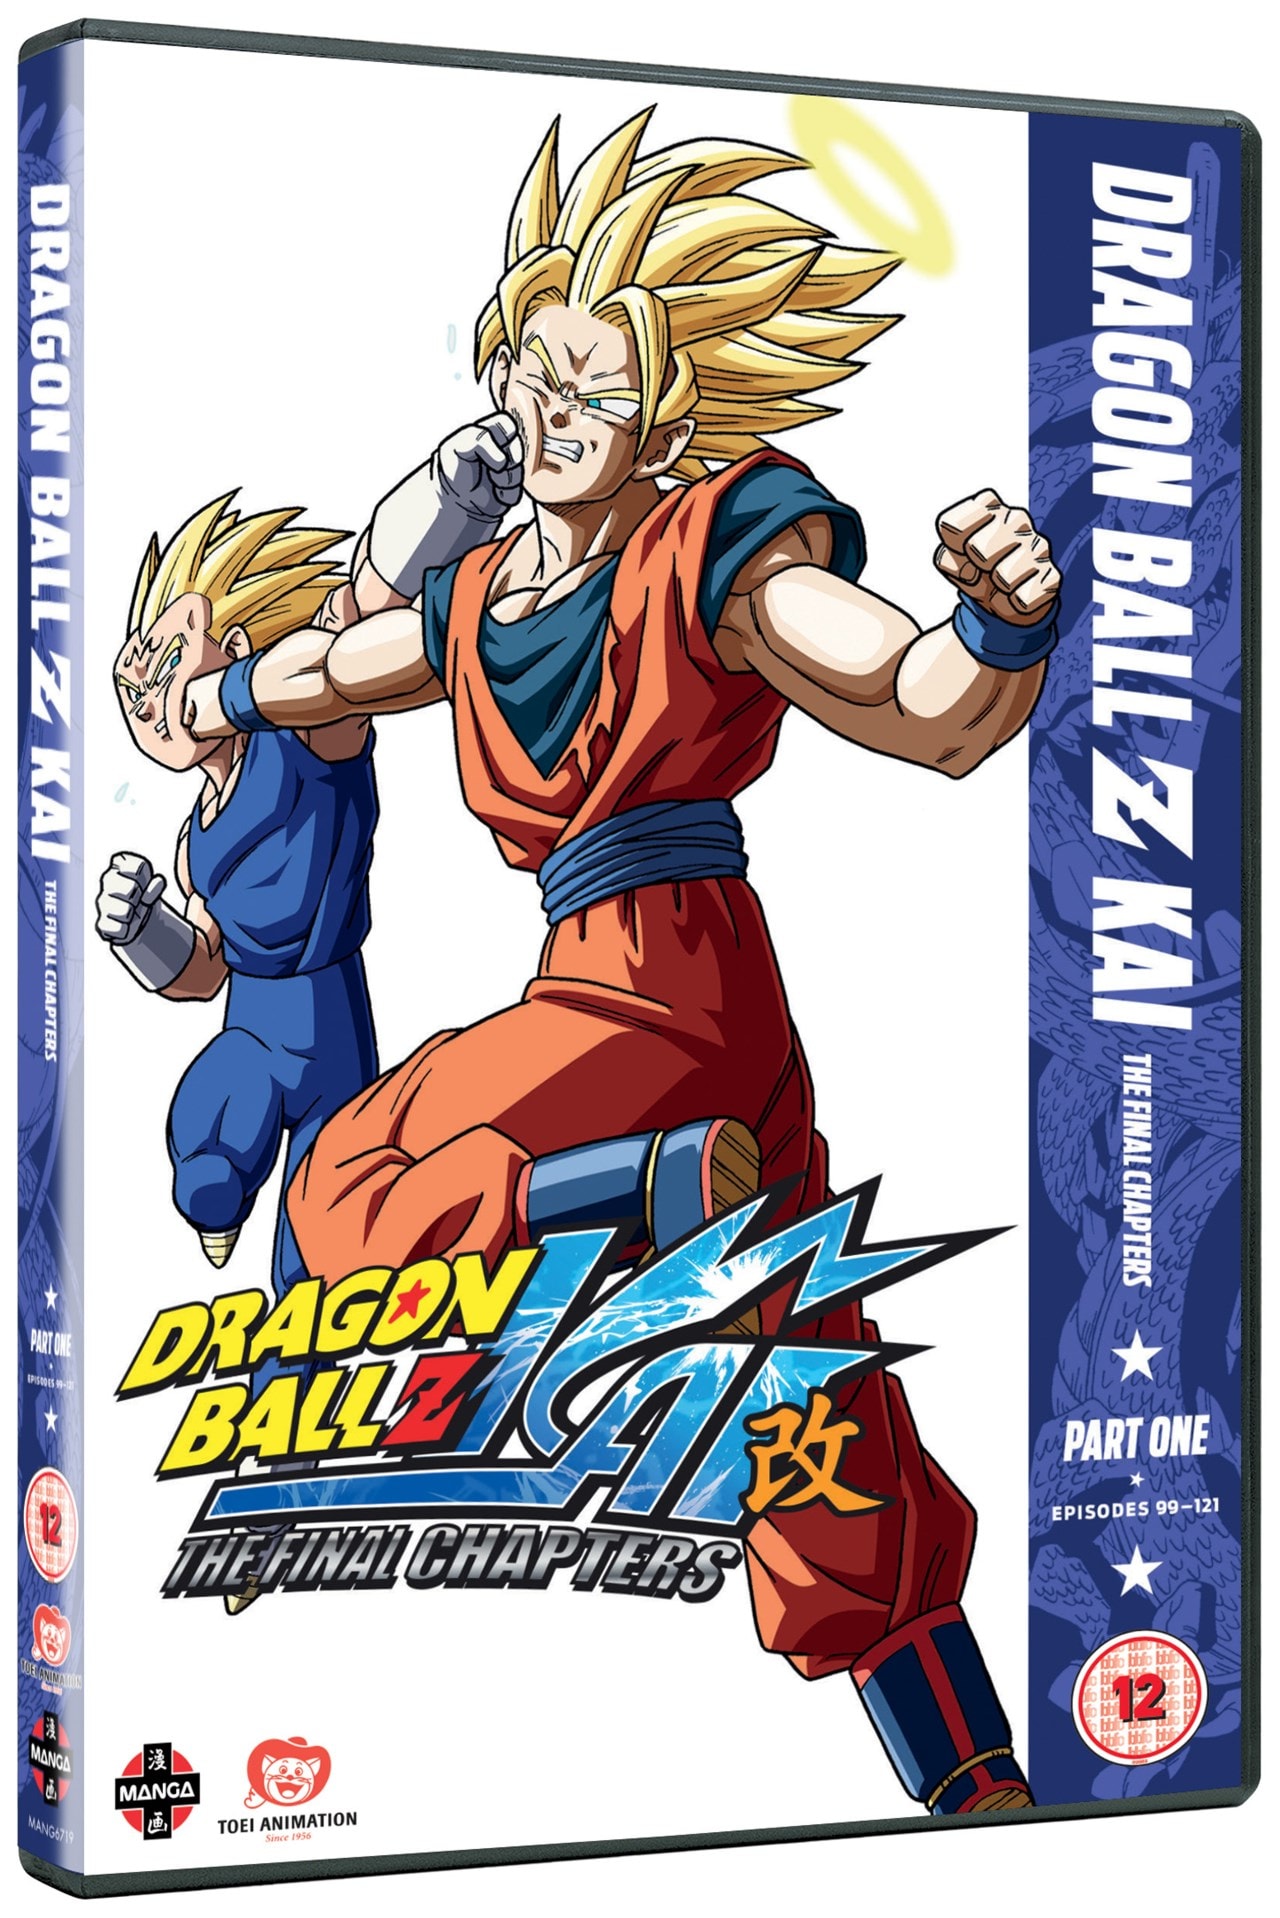 Dragon Ball Z Kai Final Chapters Part 1 Dvd Box Set Free Shipping Over Hmv Store